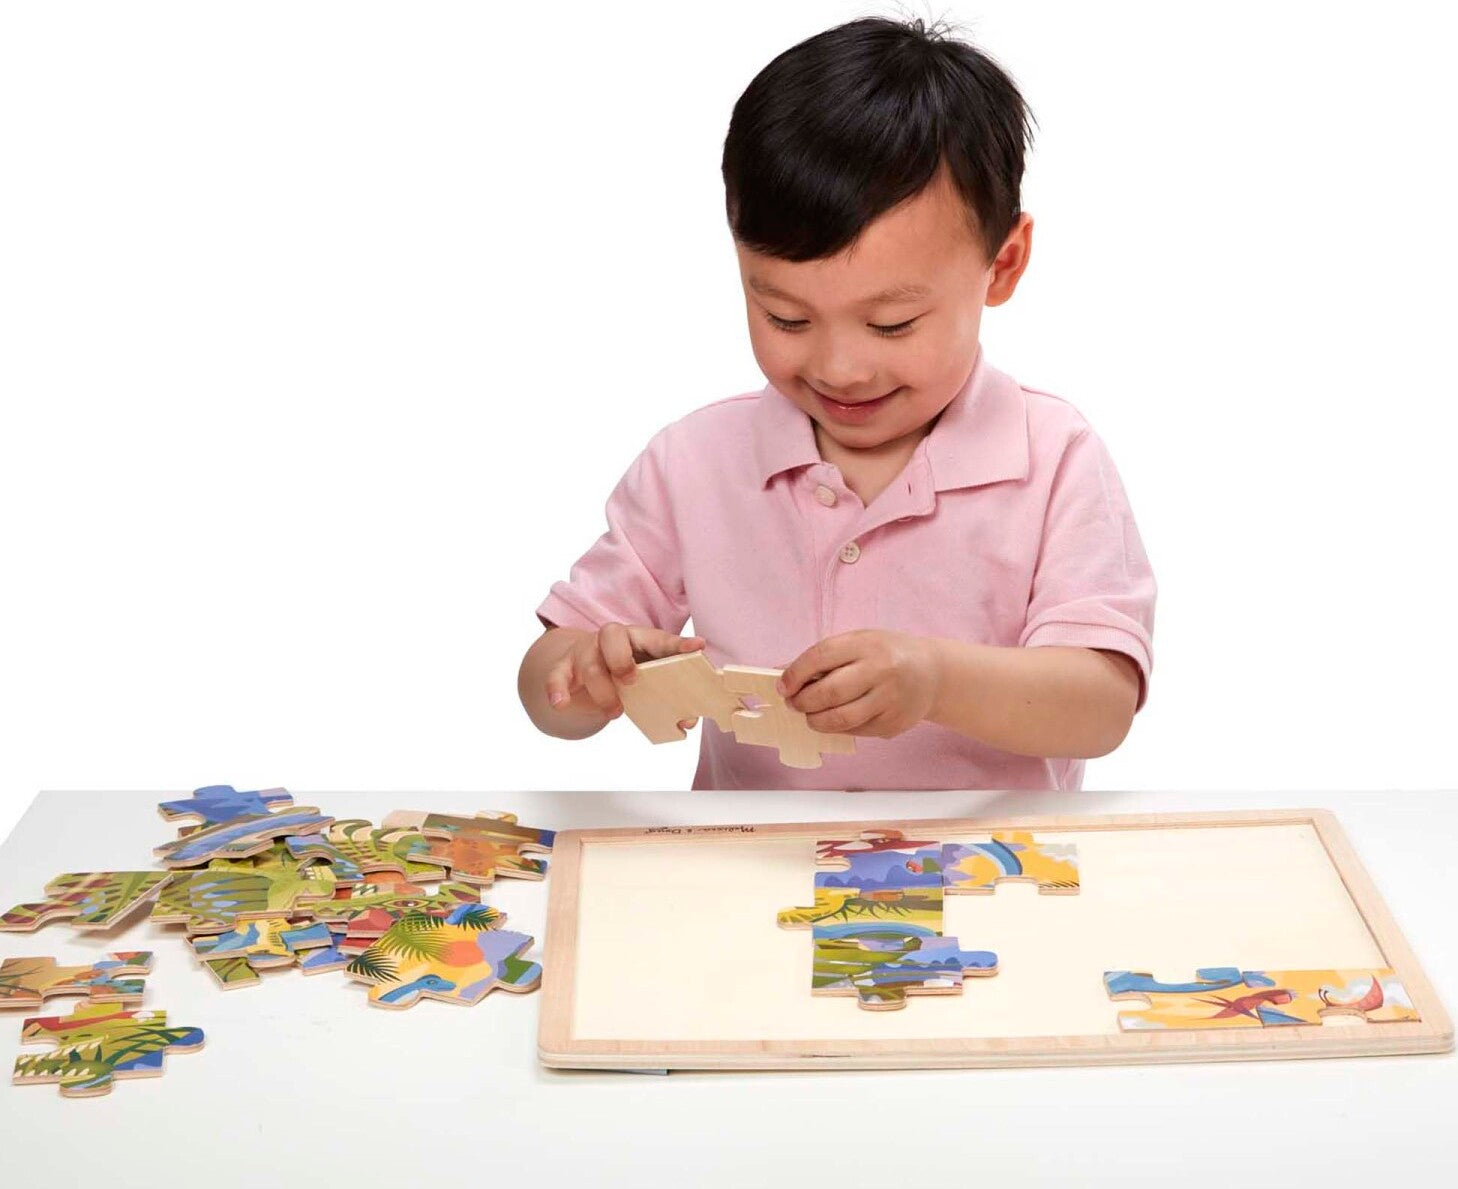 Dinosaur Wooden Jigsaw Puzzle - 24 Pieces